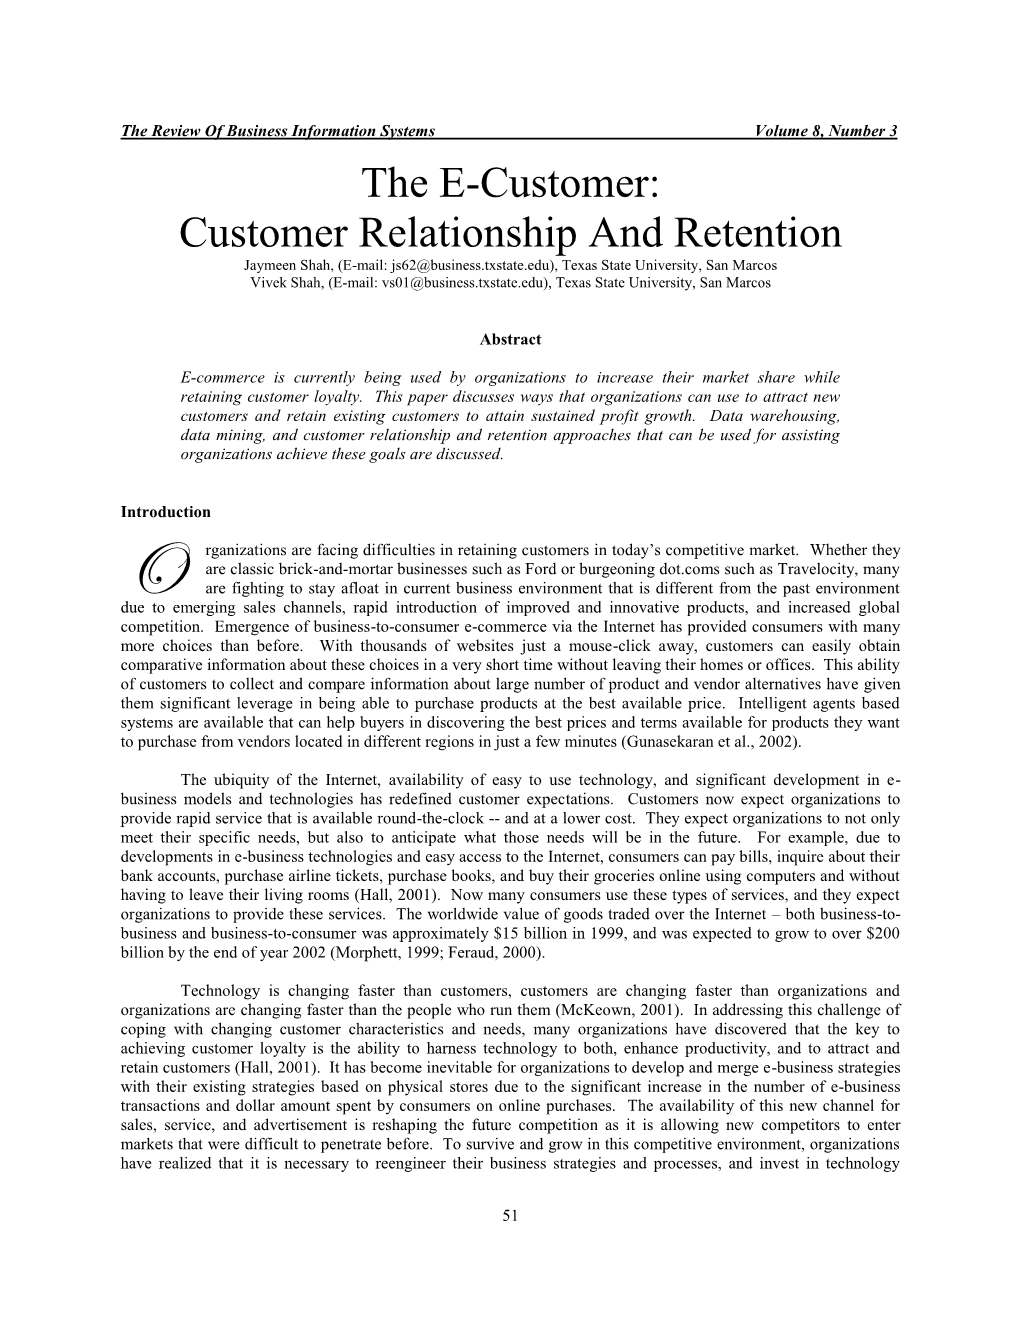 Customer Relationship and Retention